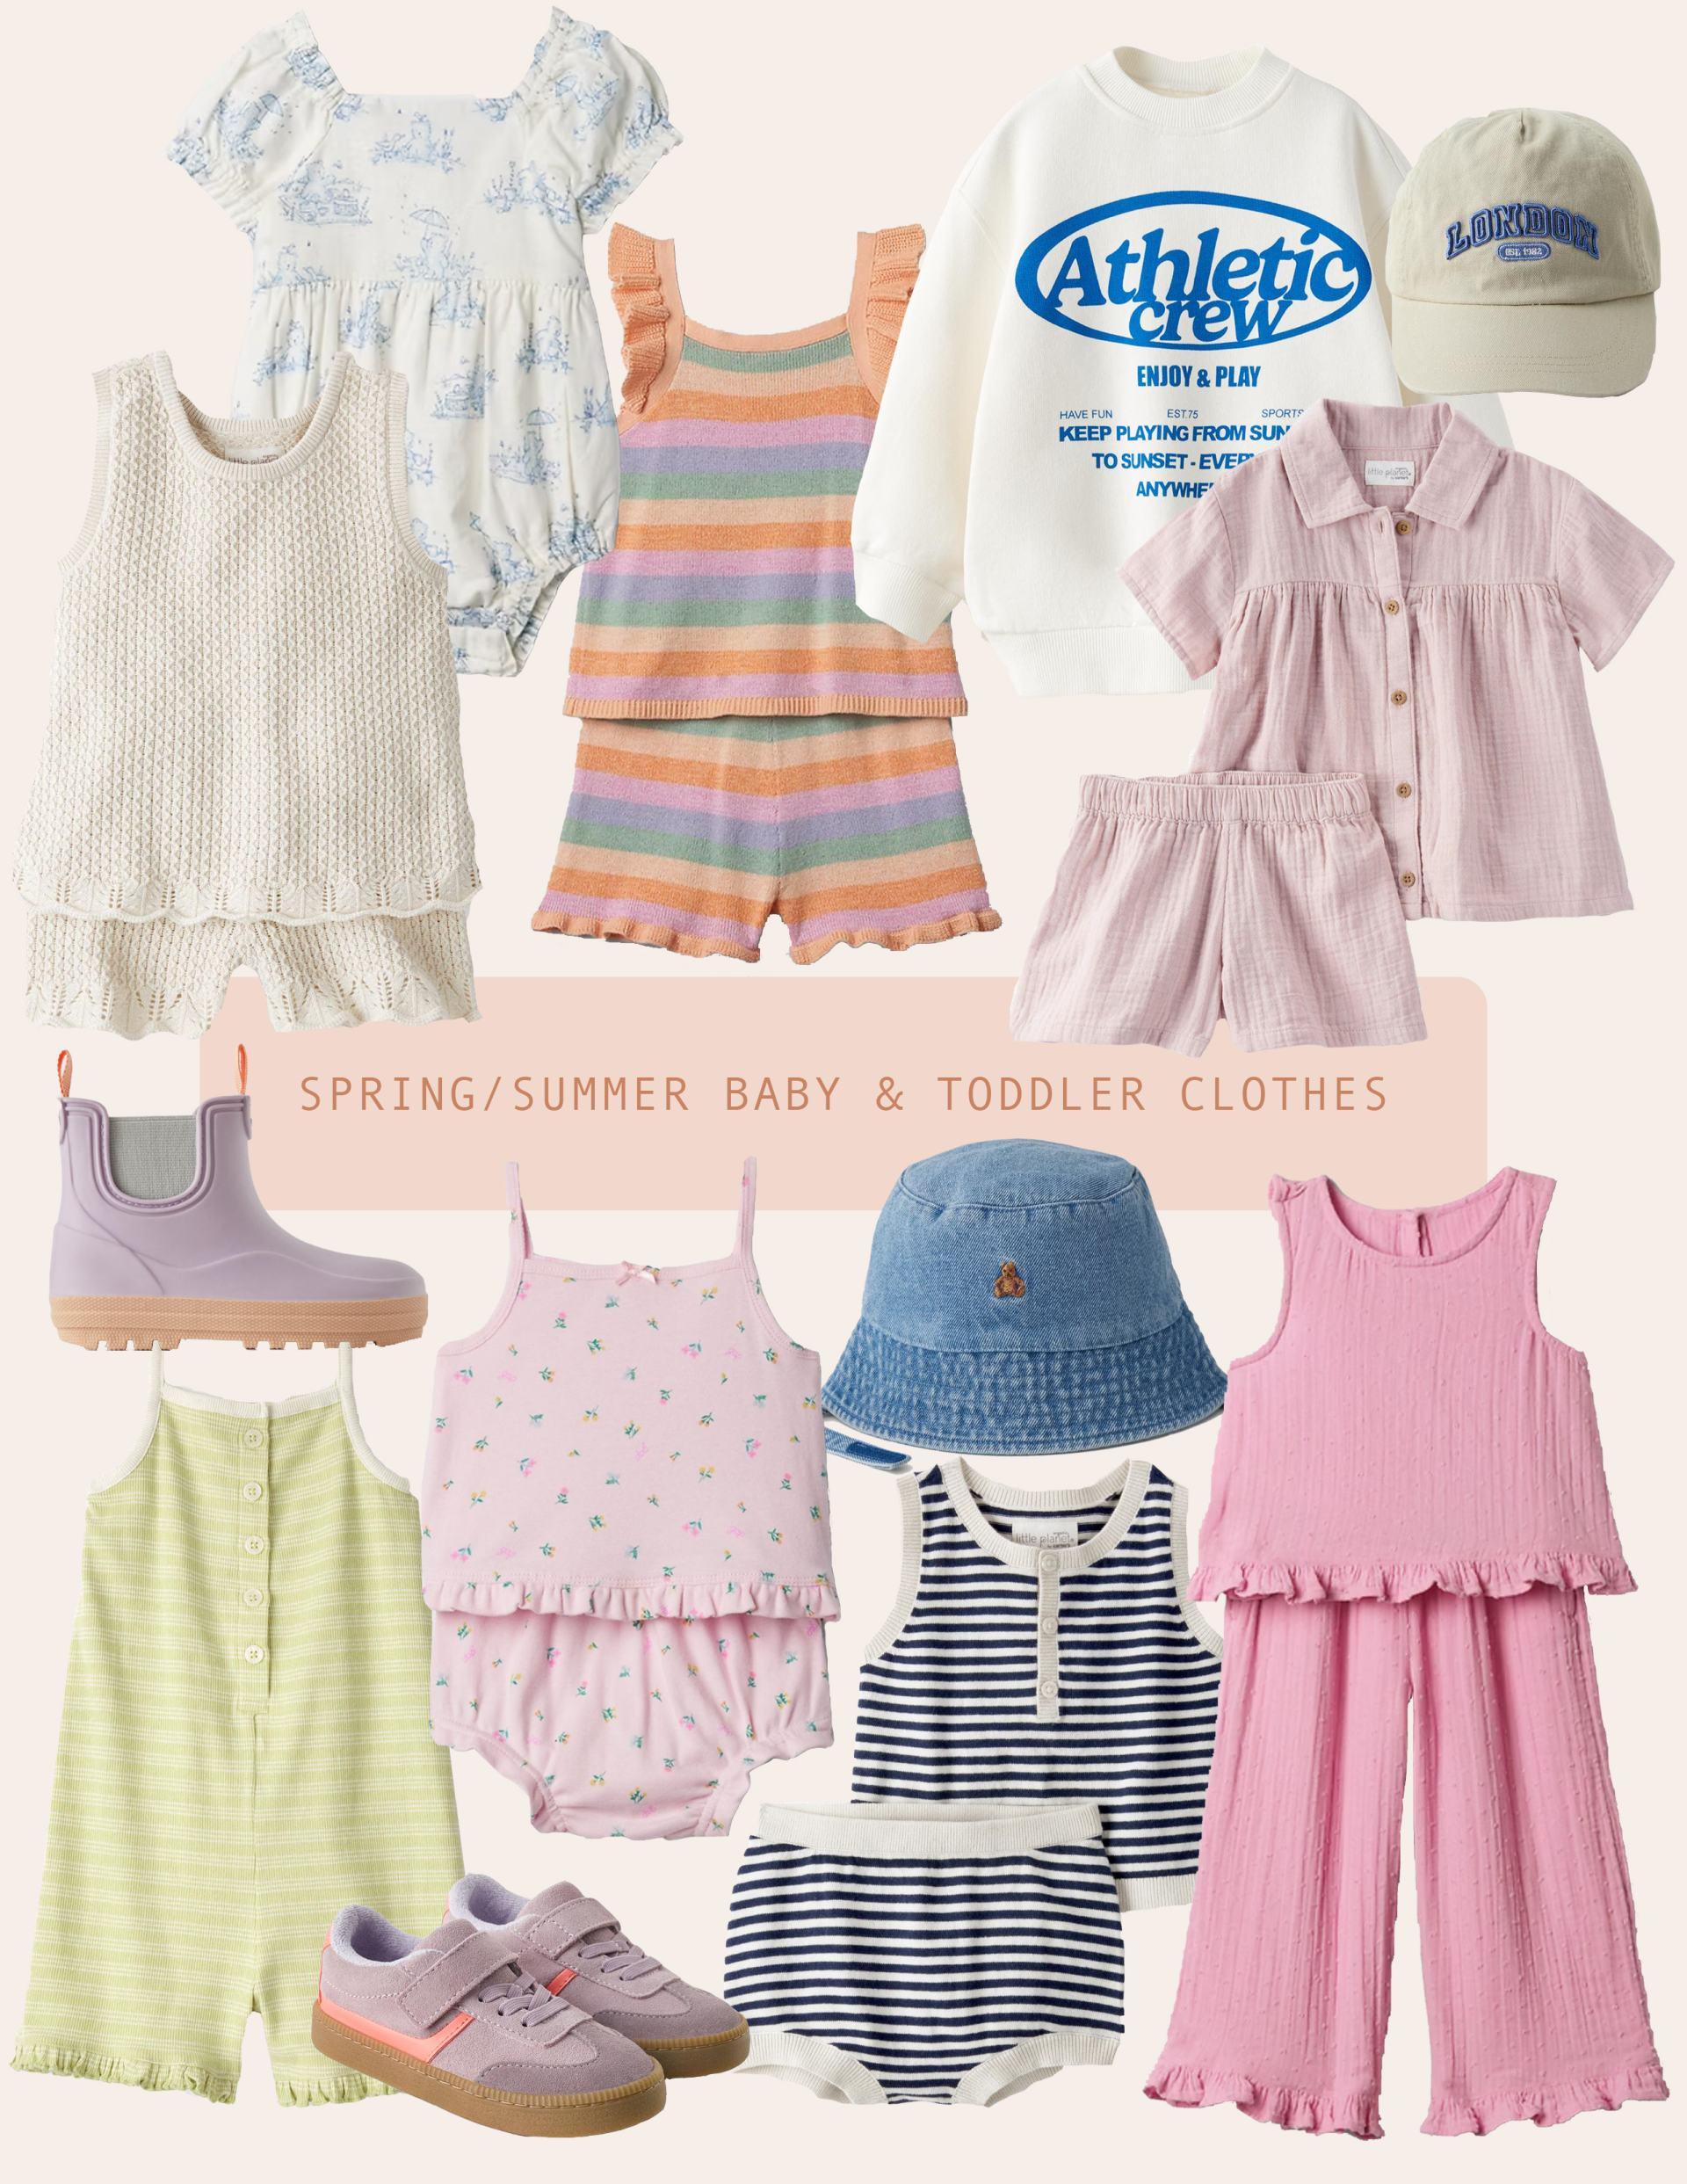 My Spring/Summer Baby & Toddler Girl Clothing Picks